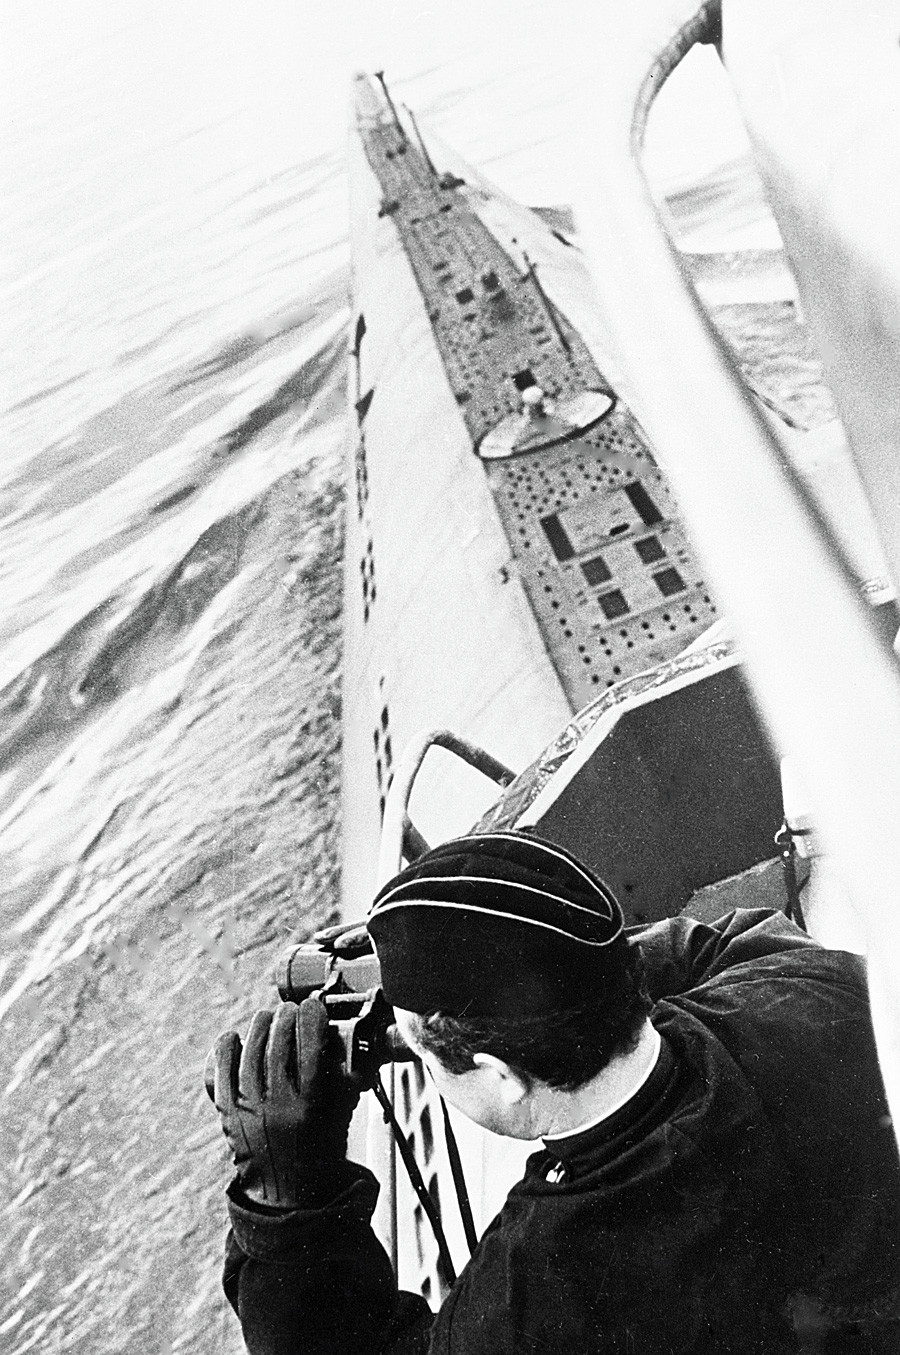 Comandante de un submarino otea el horizonte, 1968.